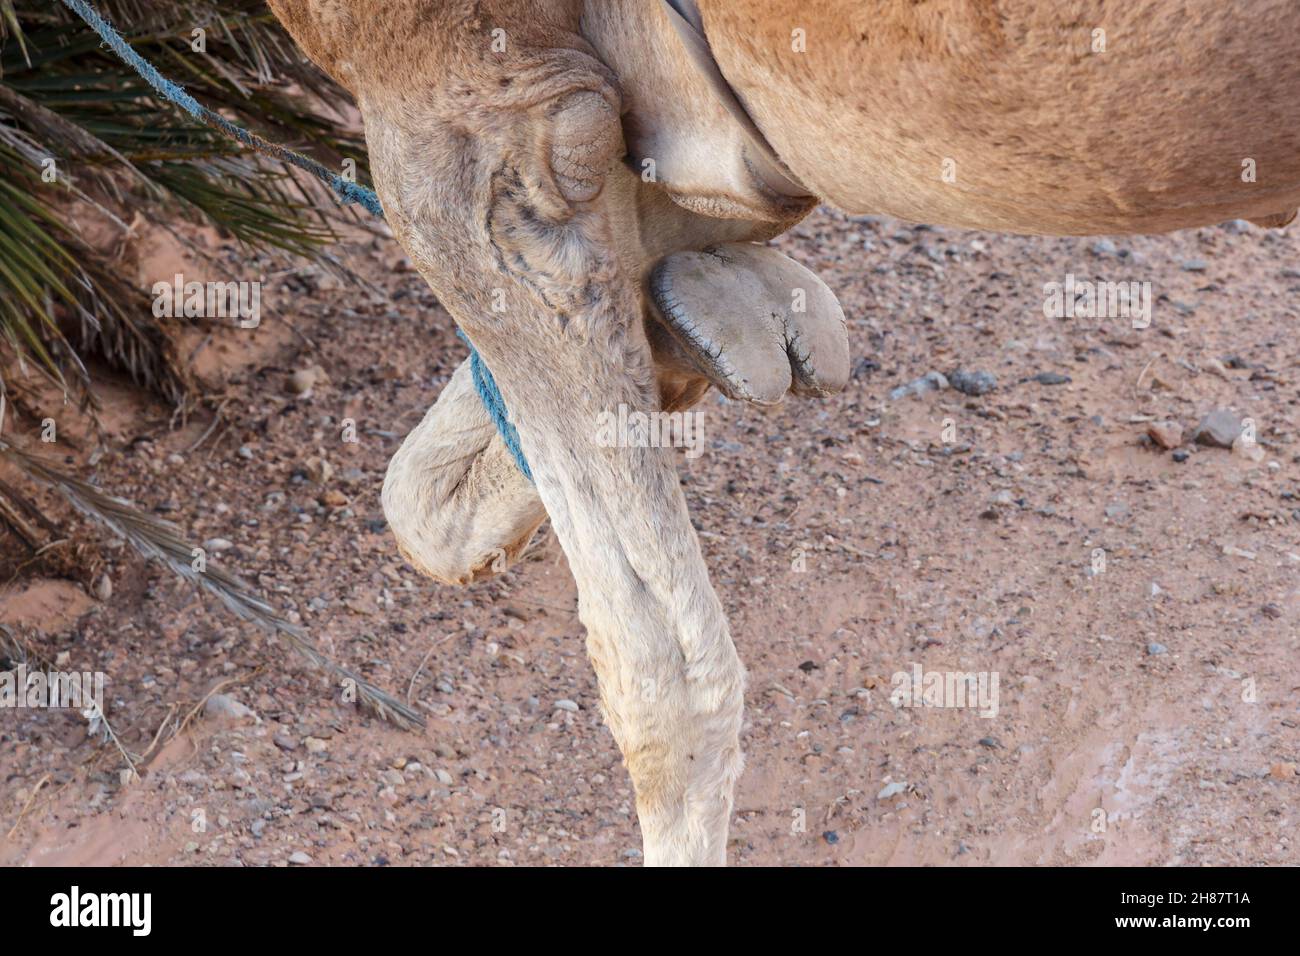 Dromedary camel's hoof detail. Camel with a tied foot in Sahara desert. Animal theme Stock Photo